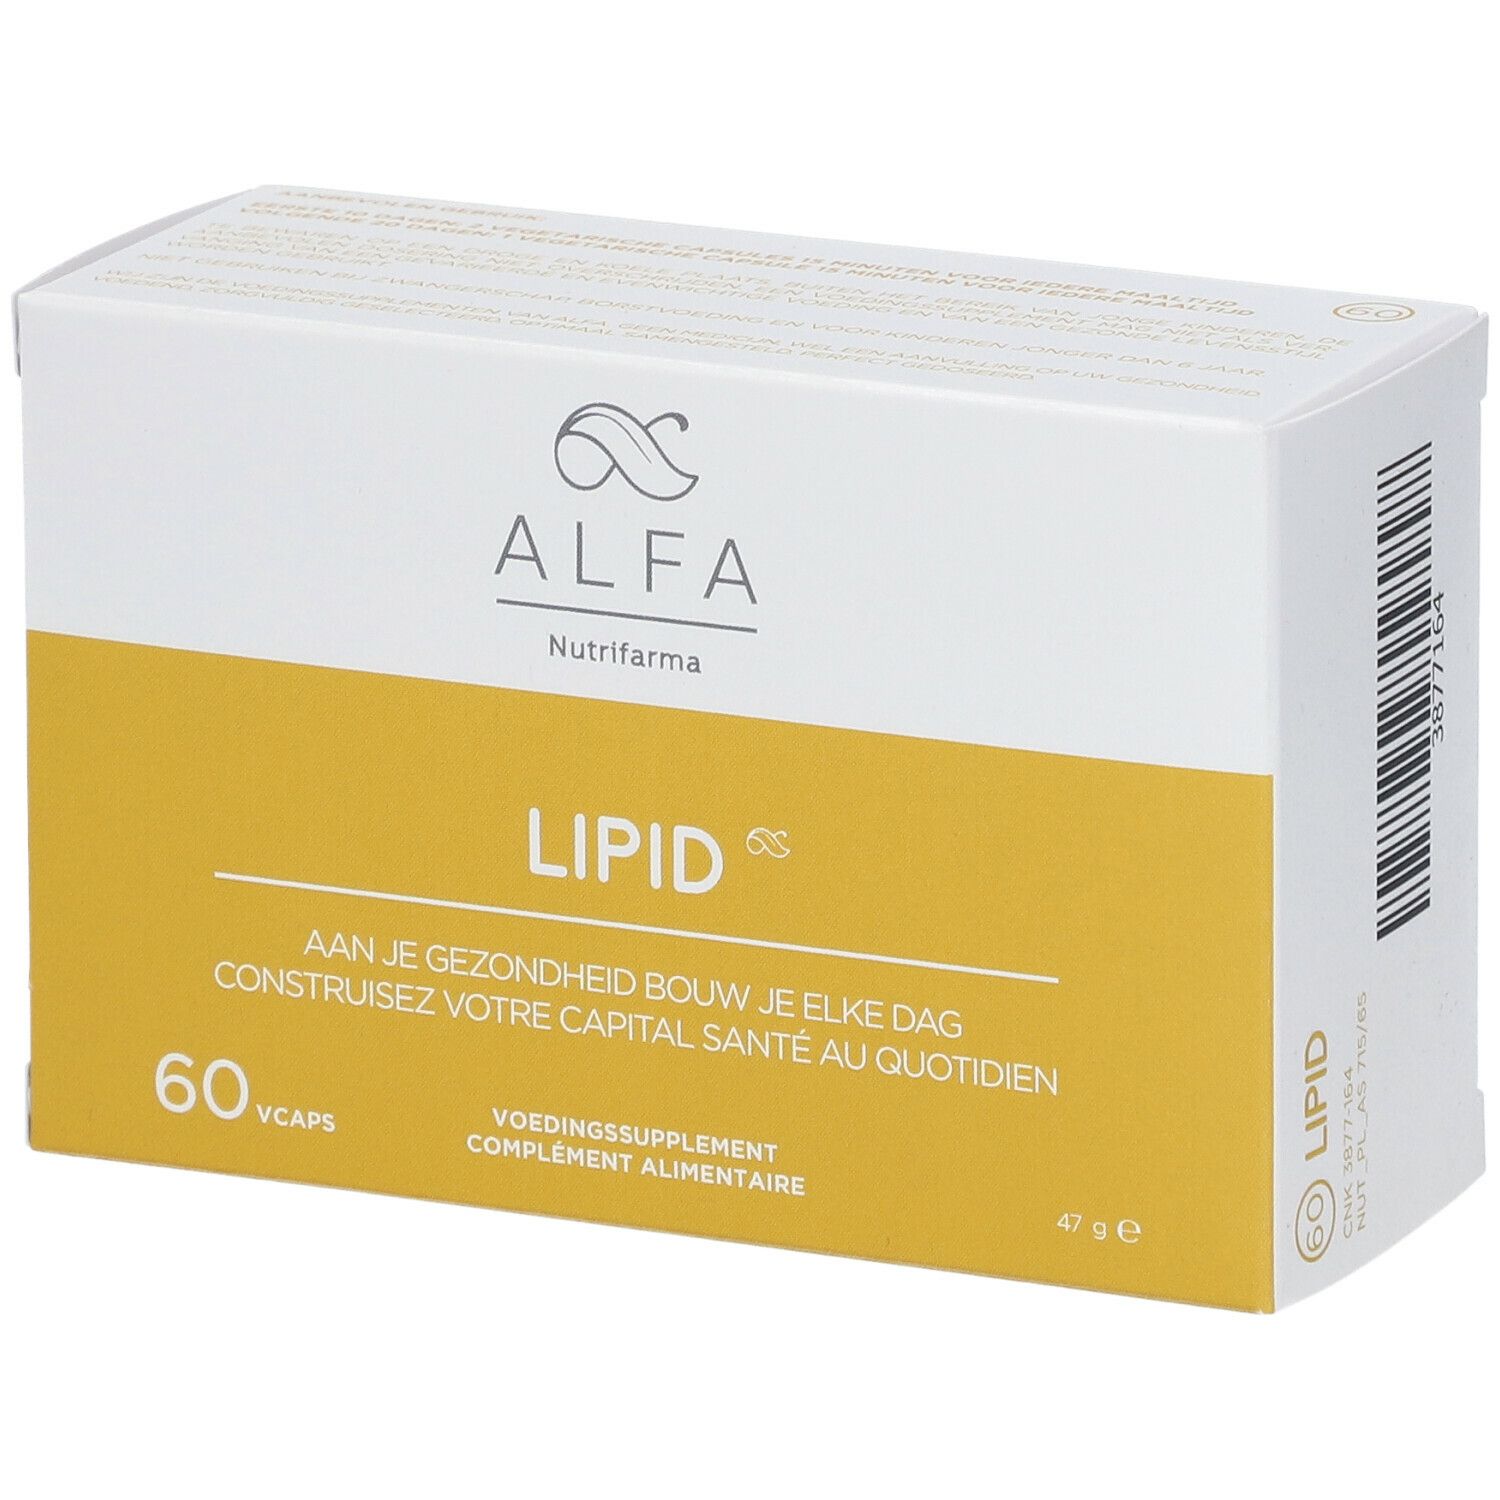 Image of ALFA Lipid